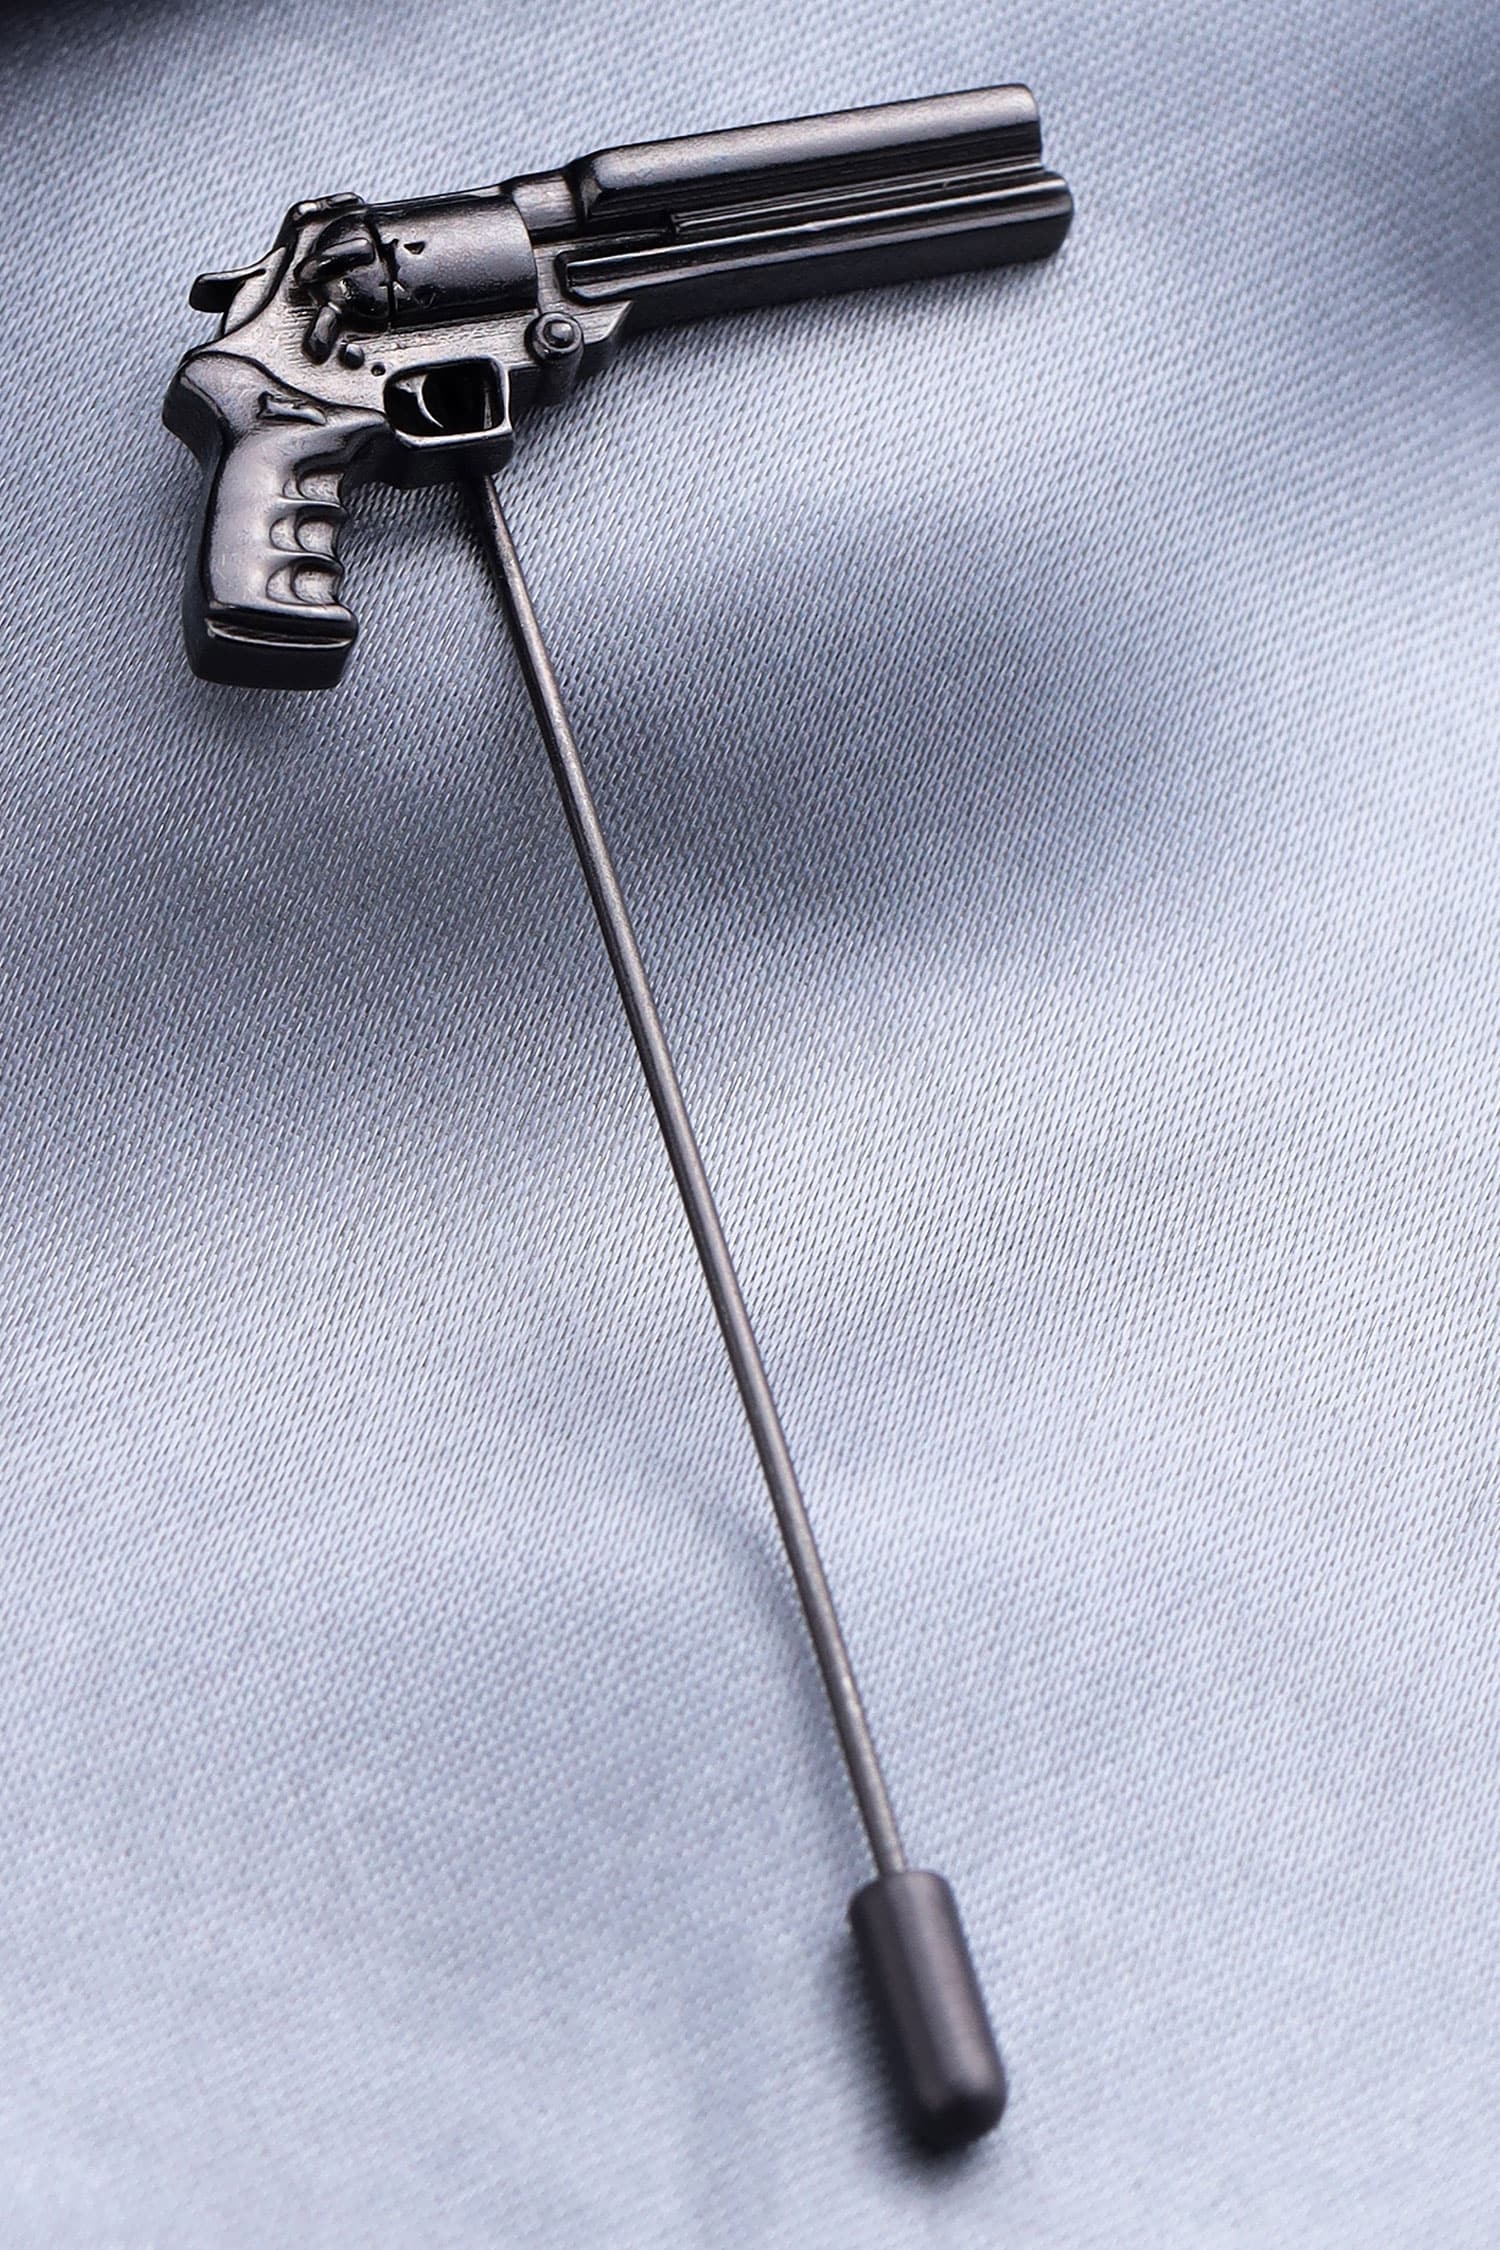 Cosa Nostraa Black Power Gun Lapel Pin